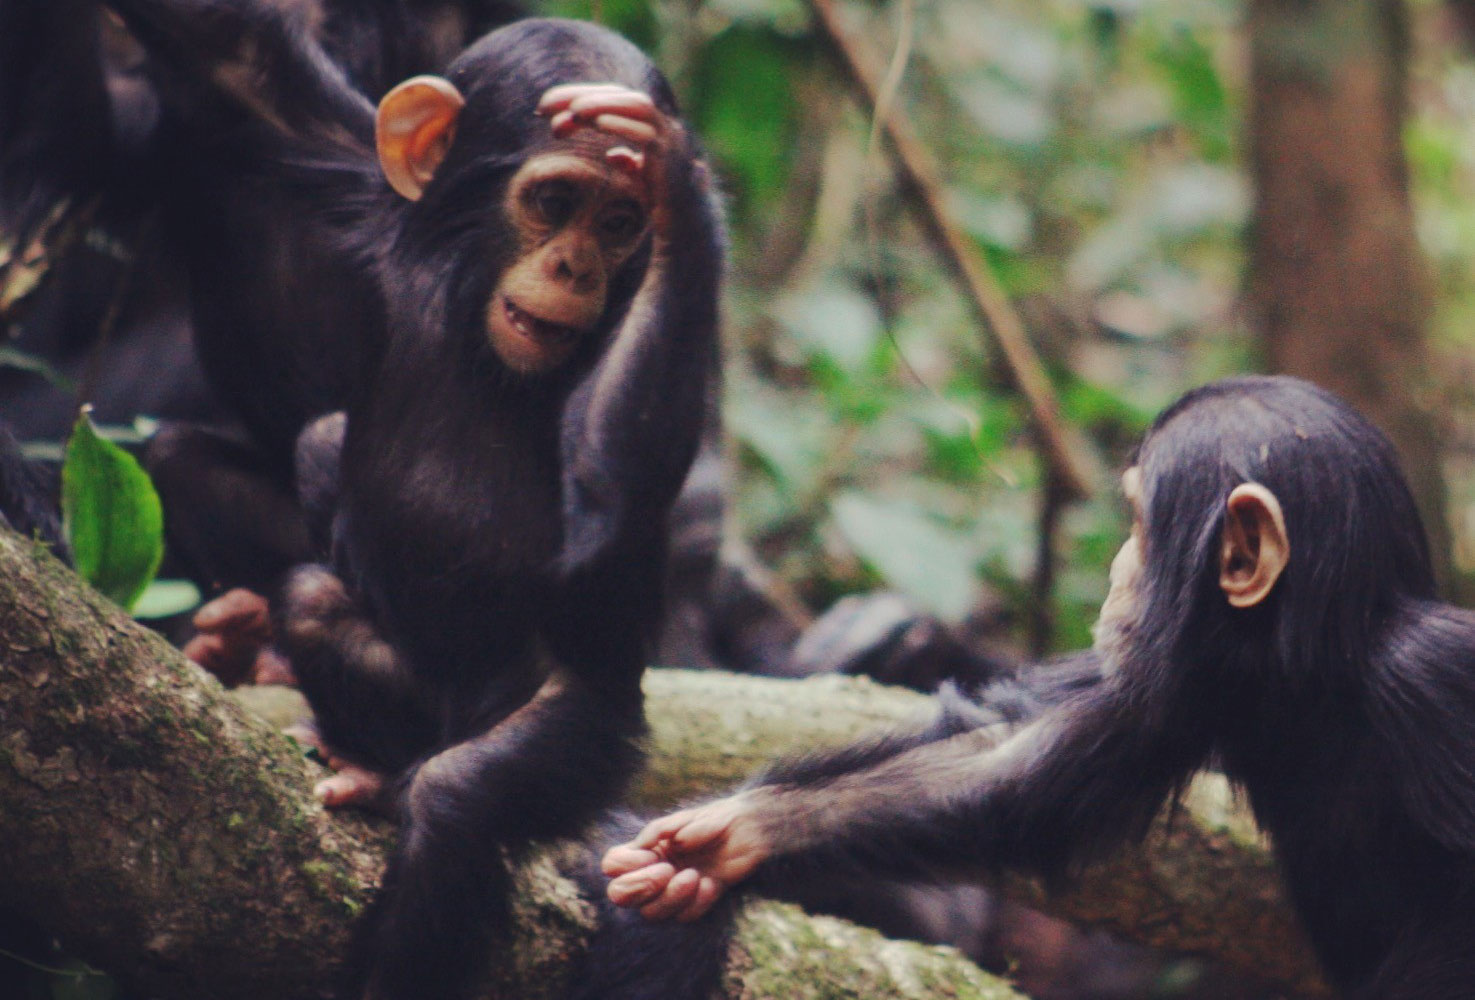 Image - Chimpanzee gestures follow the same laws as human language